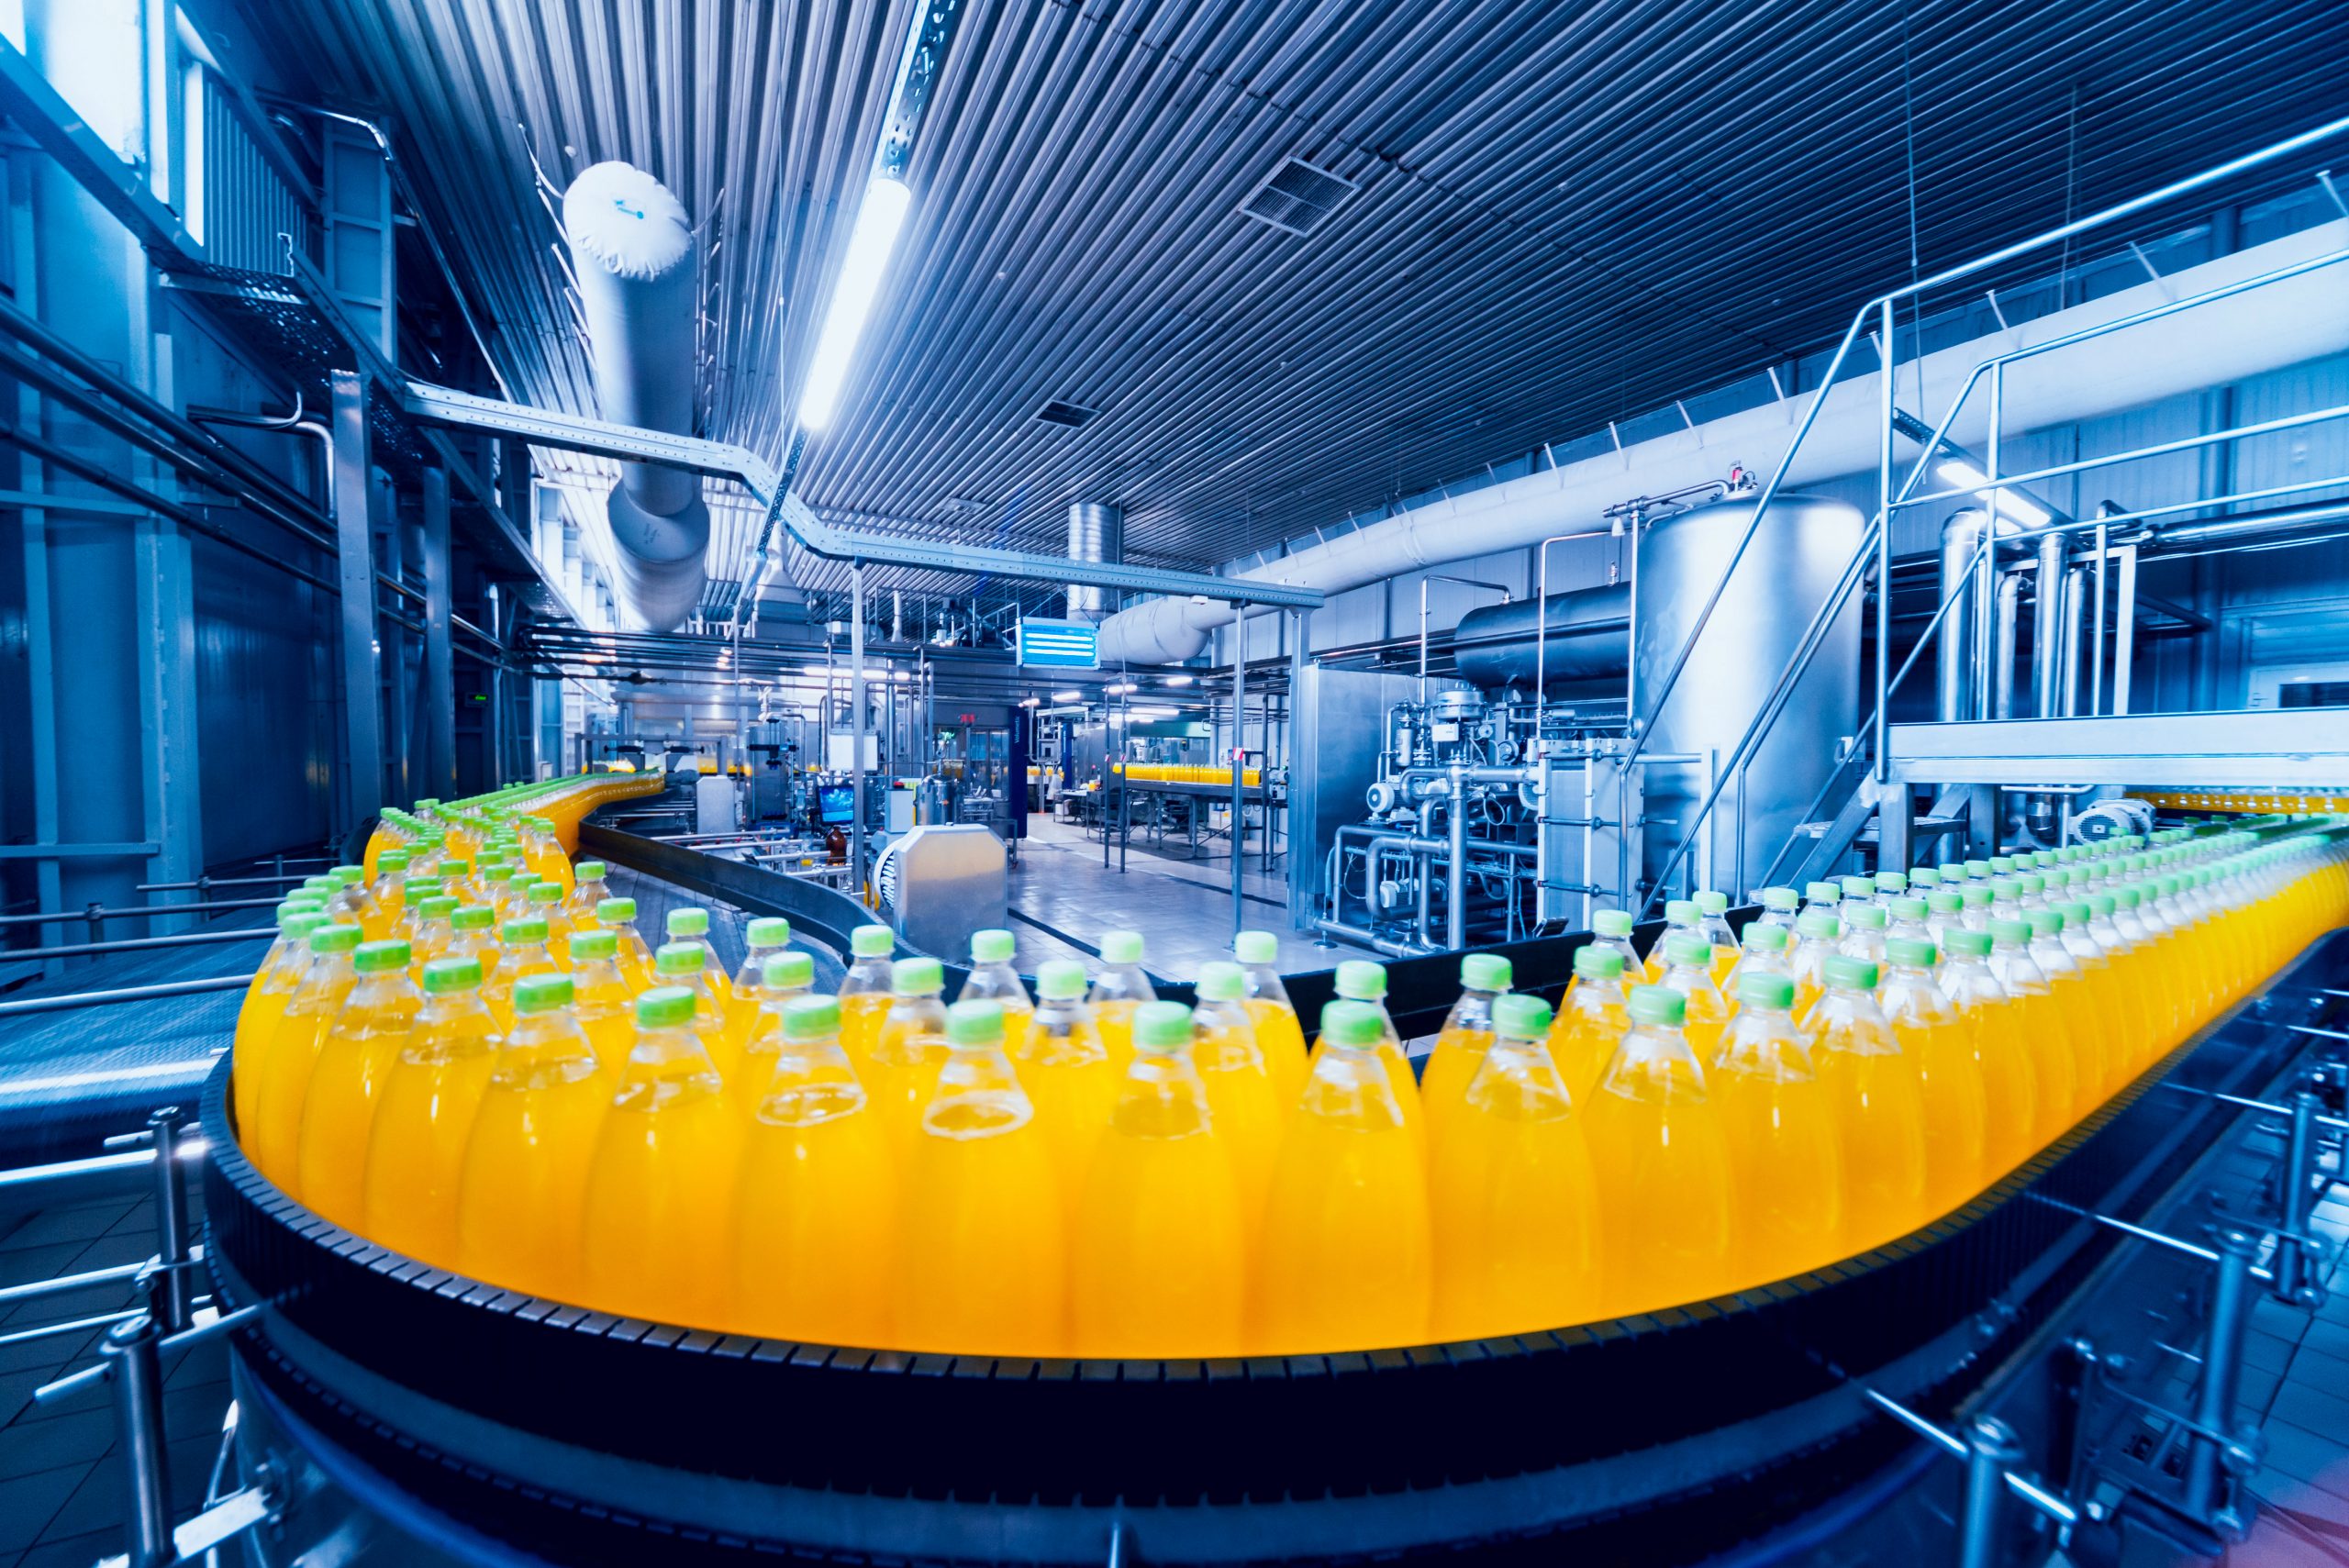 BJM Pumps High Temperature Pumps Help Profitability of Juice Producer | IFS